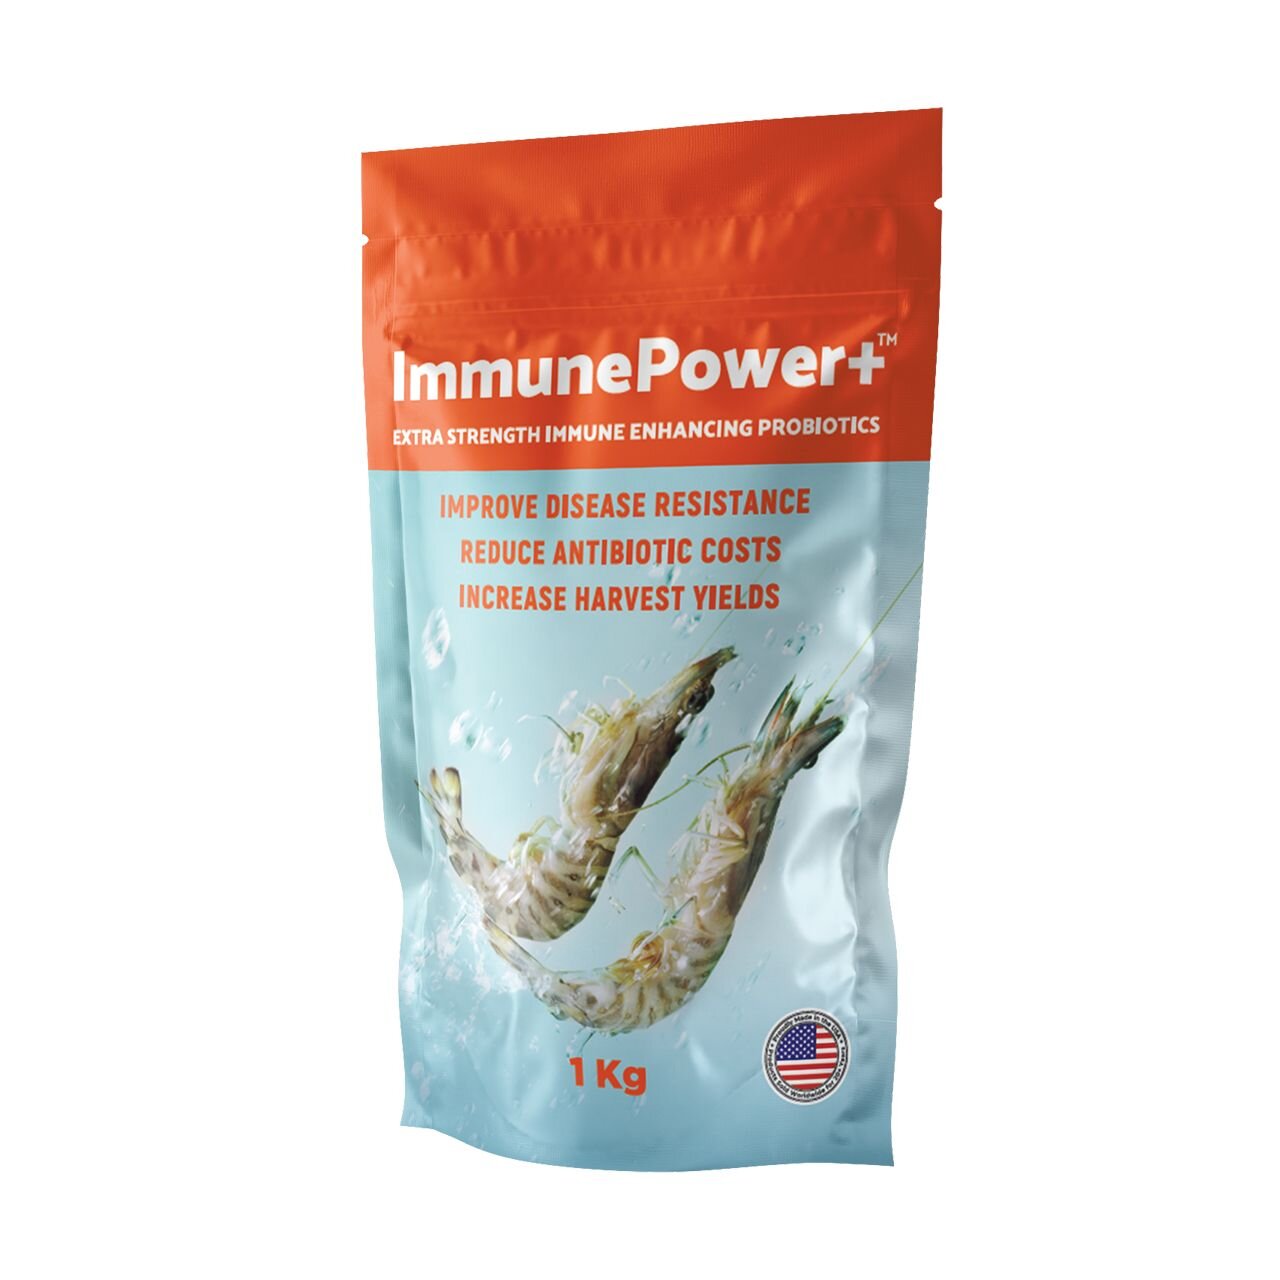 ImmunePower+™ - Extra strength immune enhancing probiotics for shrimp